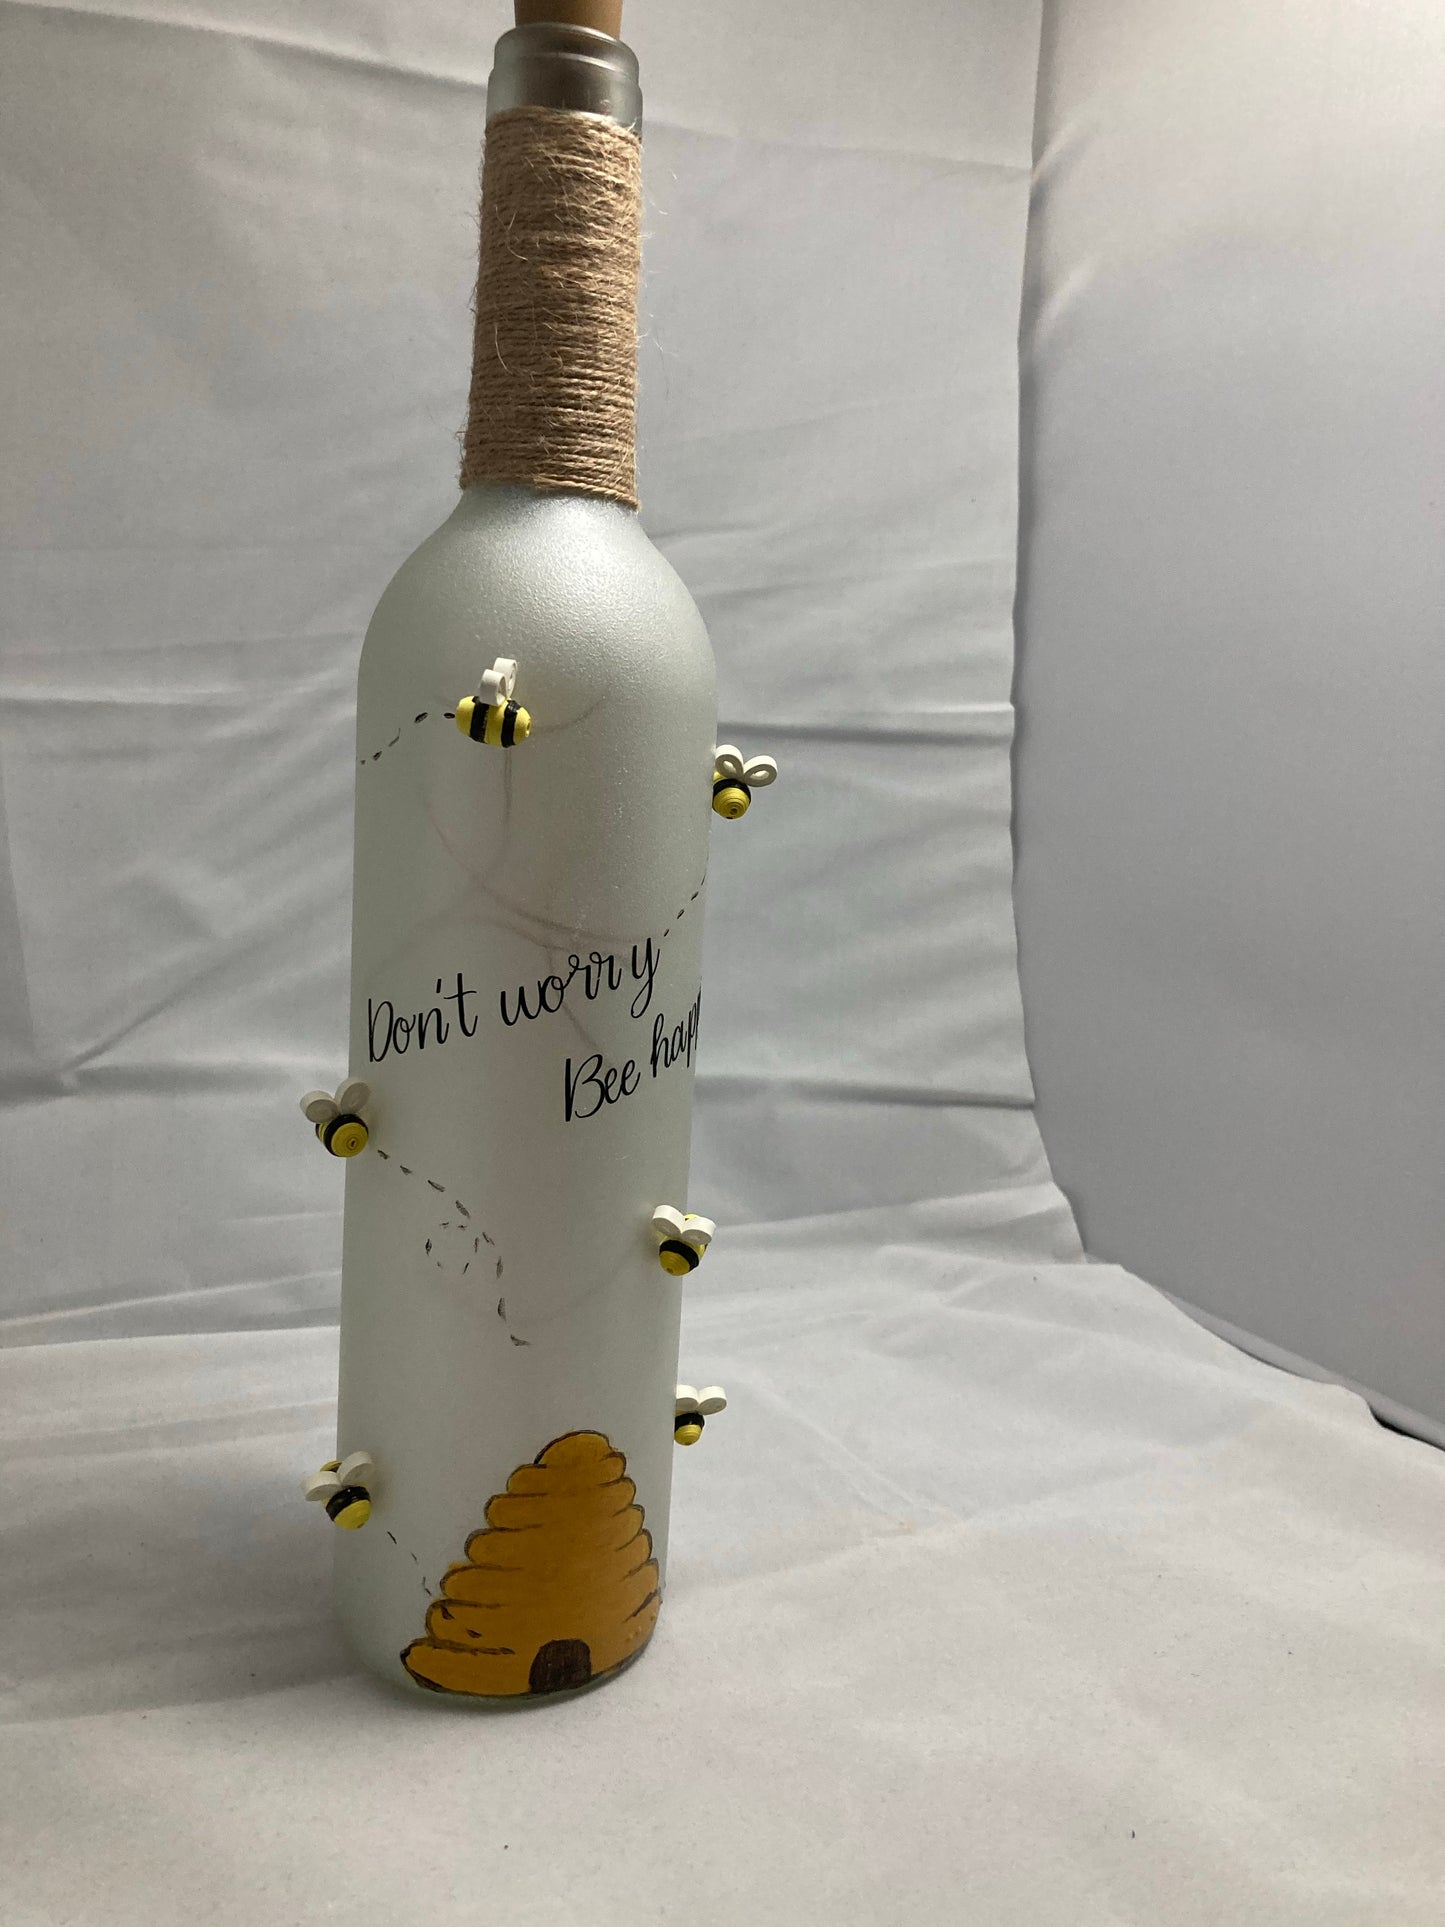 Light up Bee happy bottle